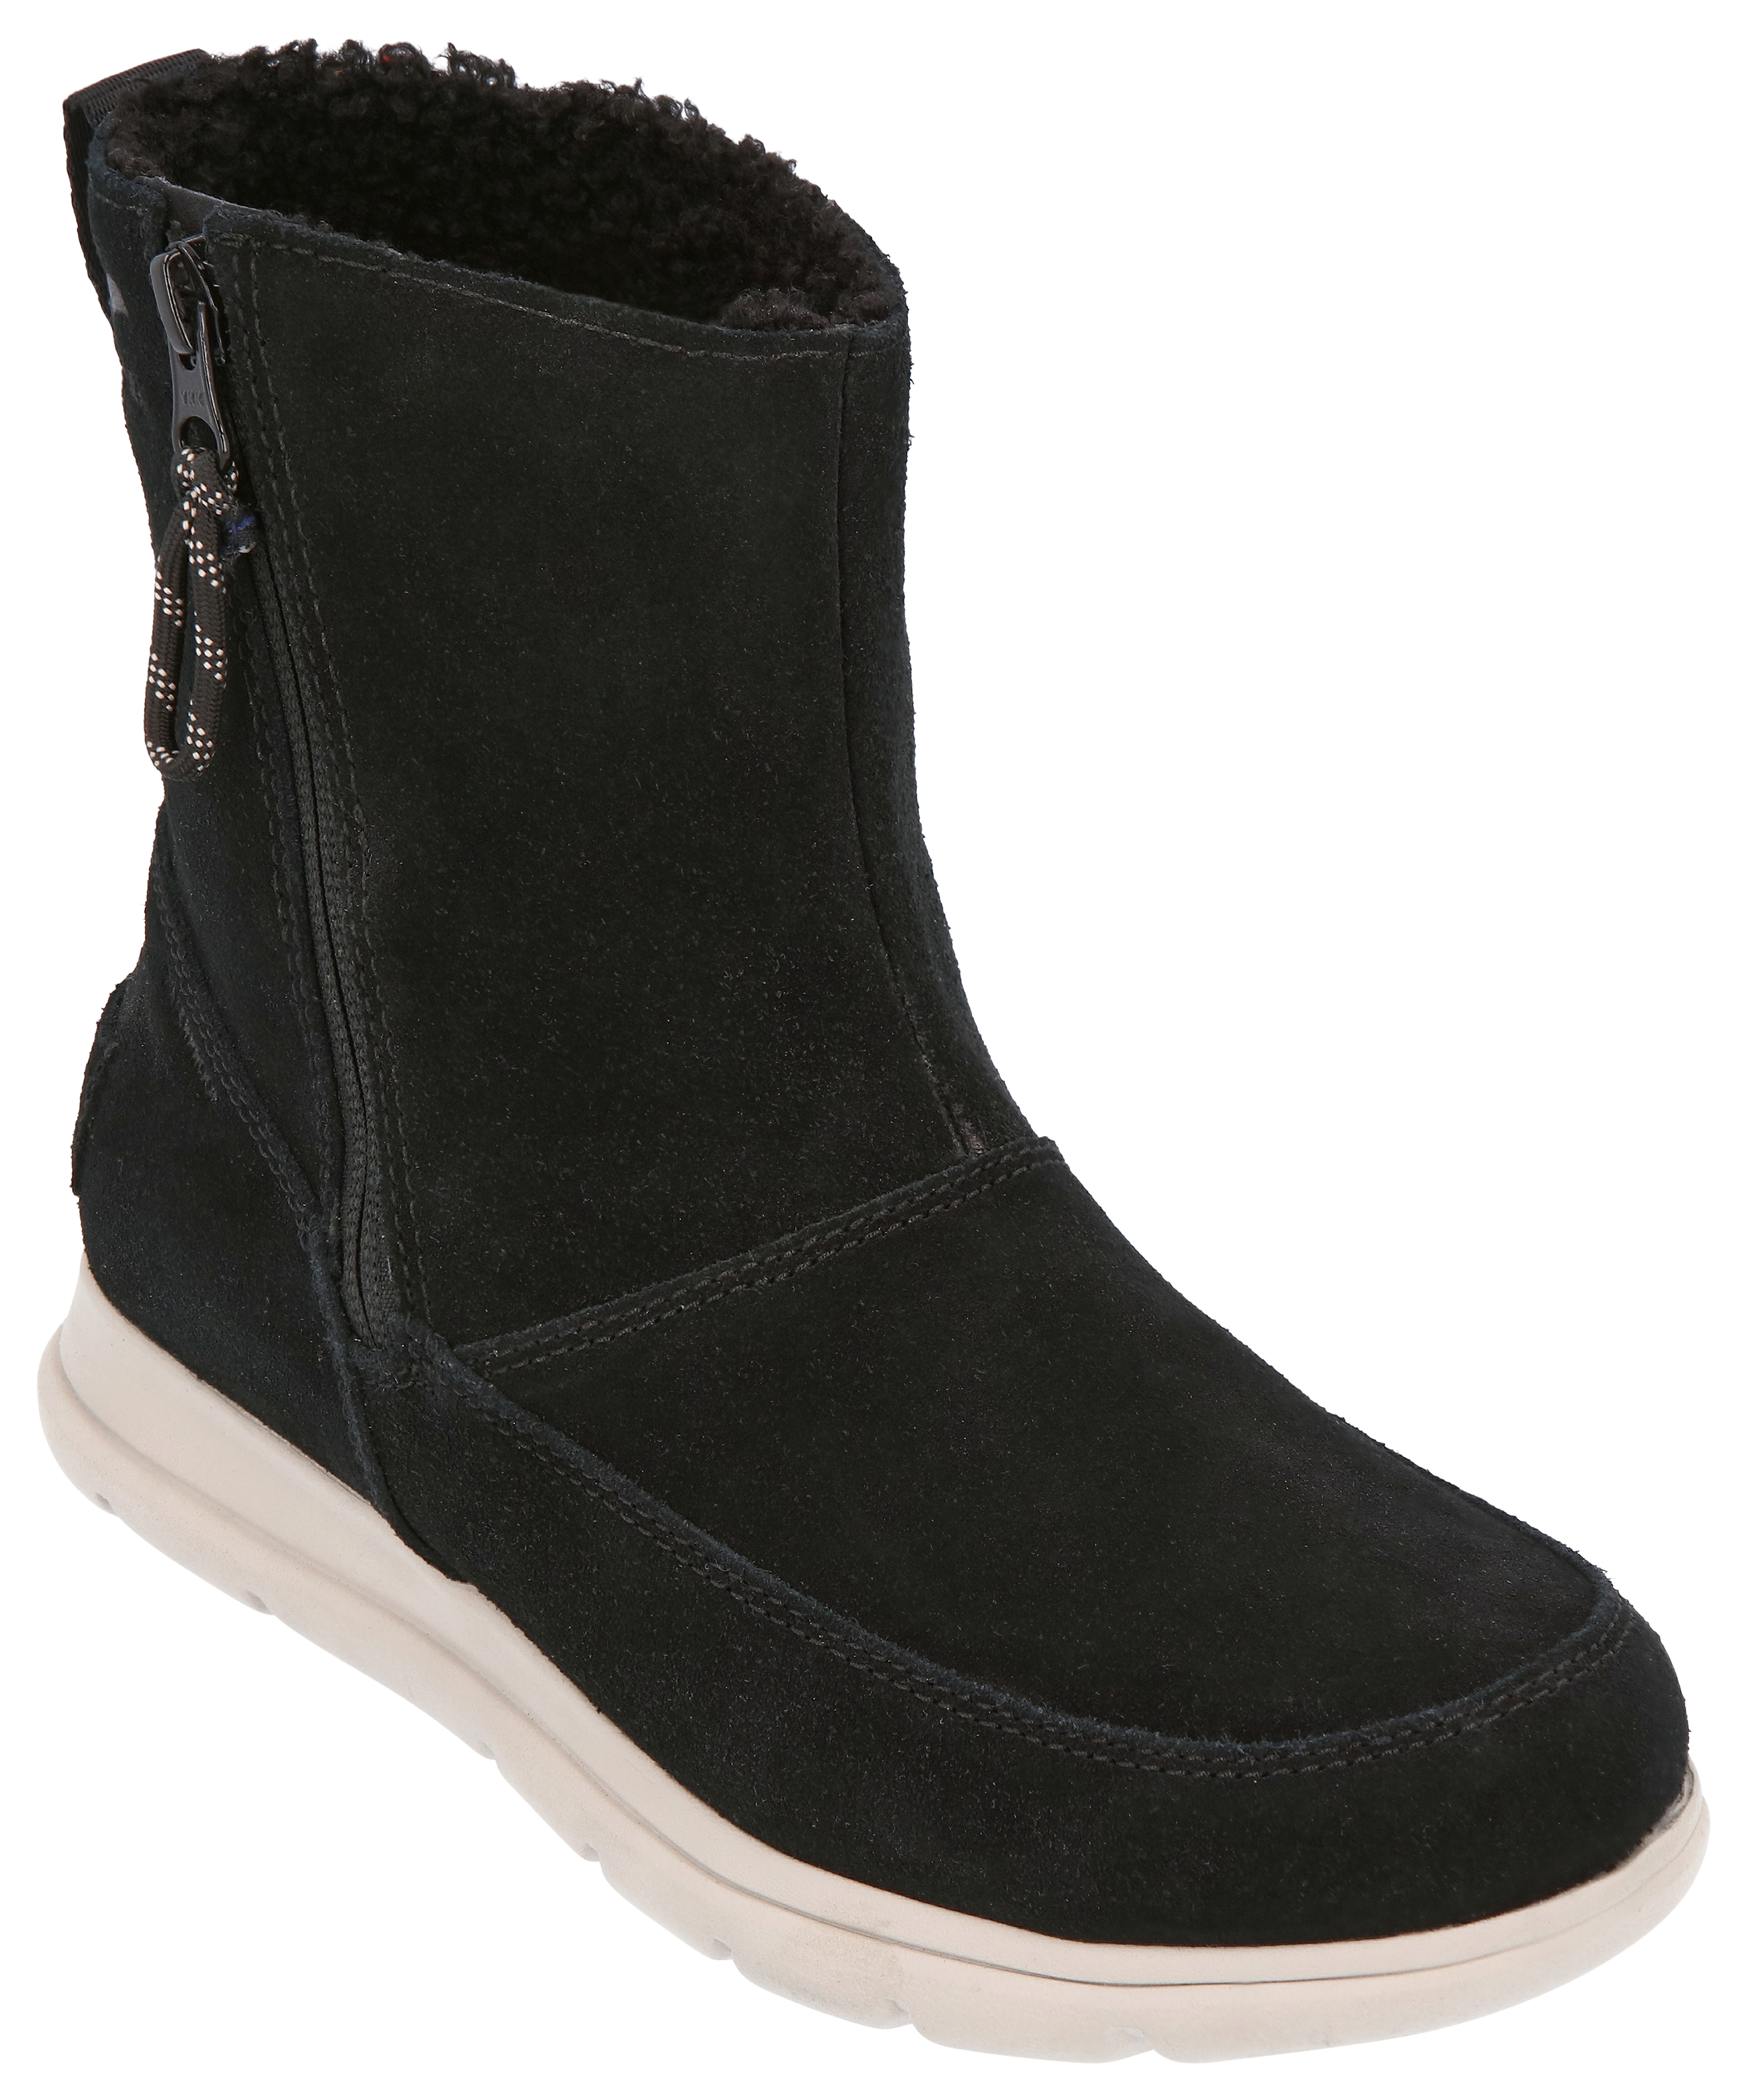 Sorel Explorer Zip Boots for Ladies - Black - 8M